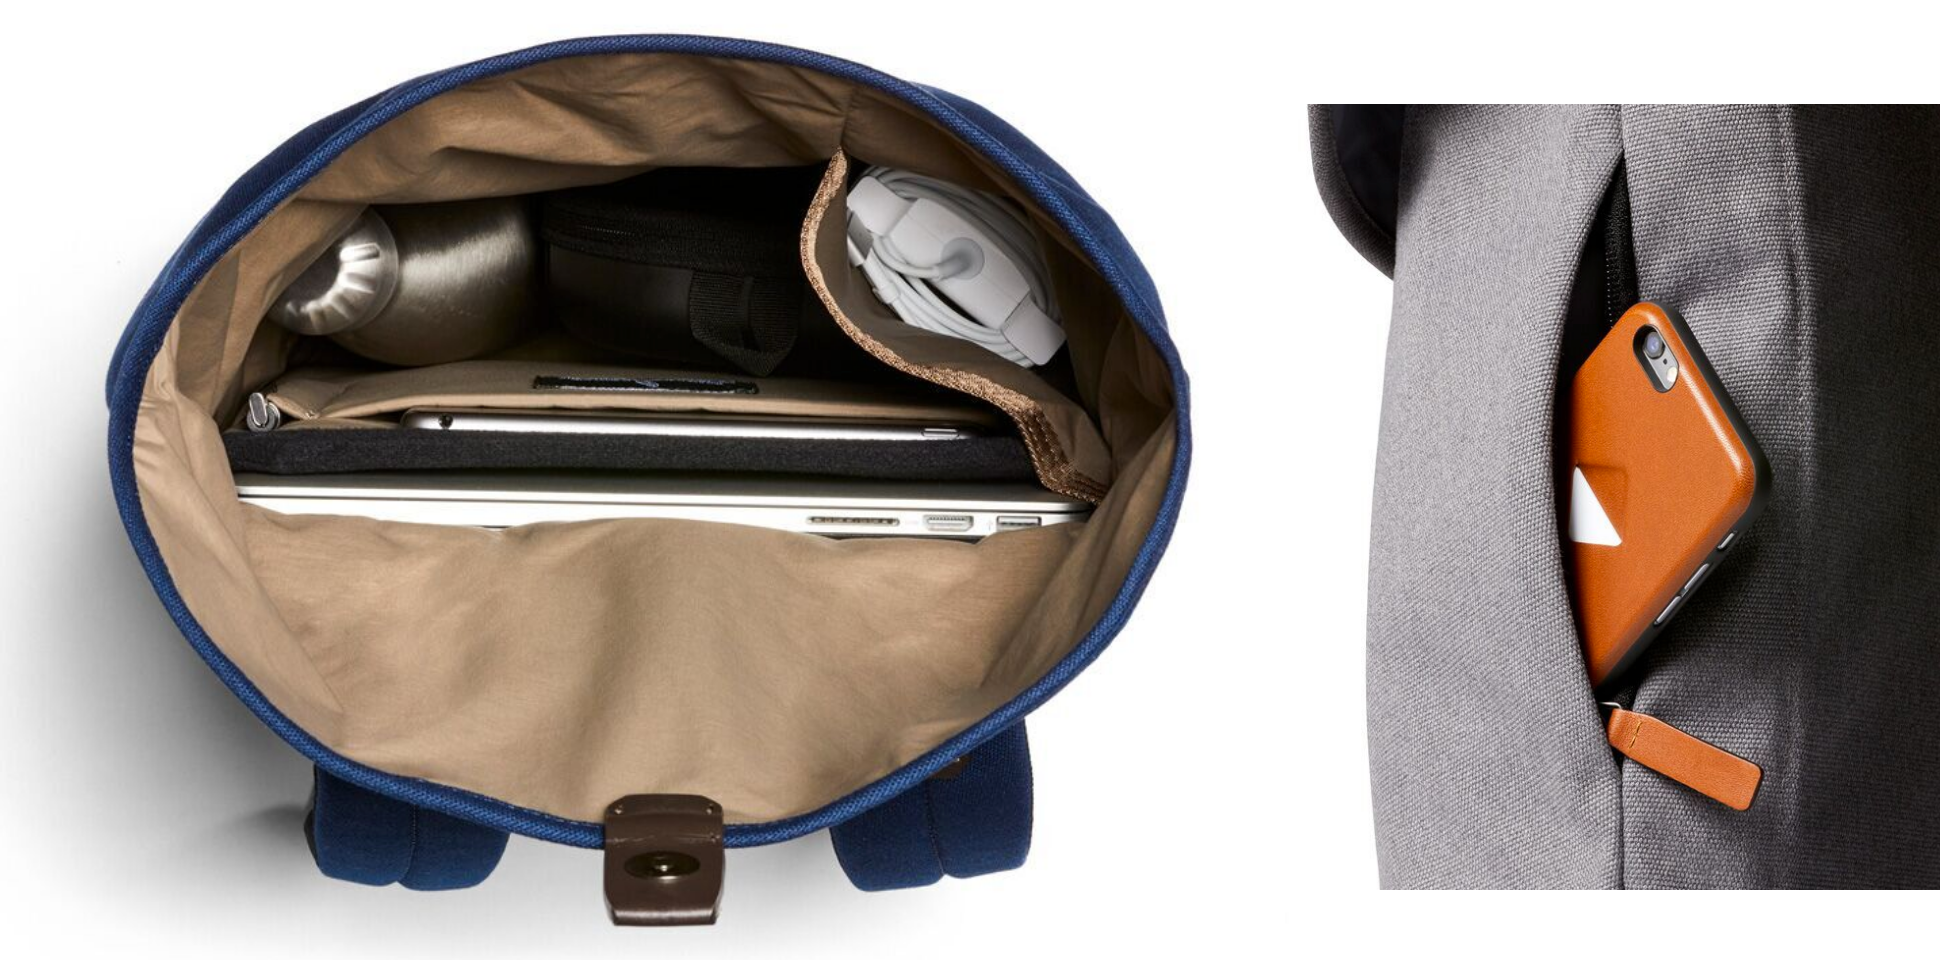 Macbook、iPad、水筒、タオル、充電ケーブルを収納したBellroy Slim Backpack Navyを上部から撮影した画像と、iPhoneの入るサイドポケットの画像